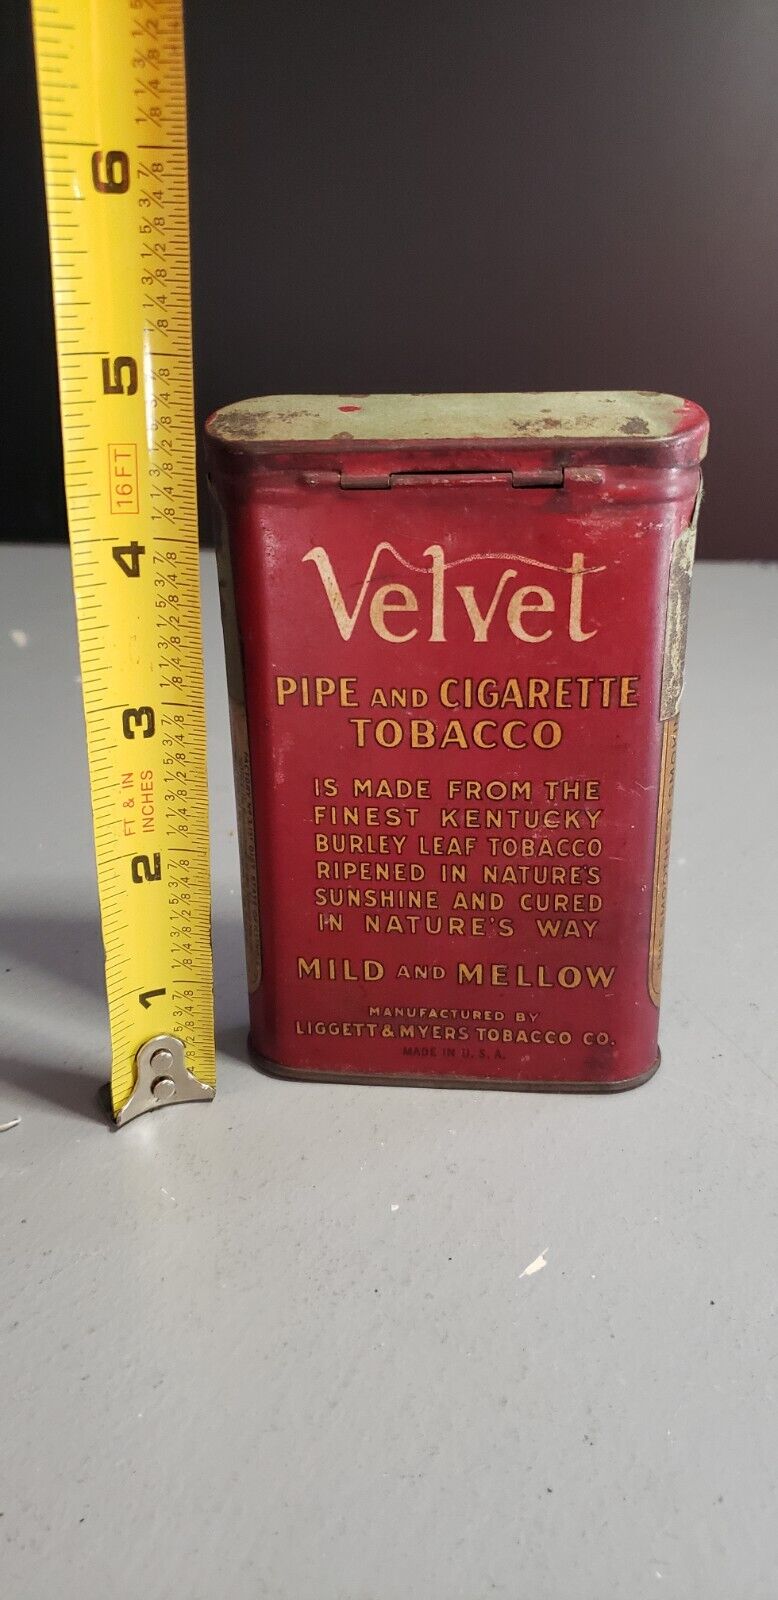 Vintage Velvet Pipe and Cigarette Tobacco Tin, Vintage Advertising Tin, Empty, Red